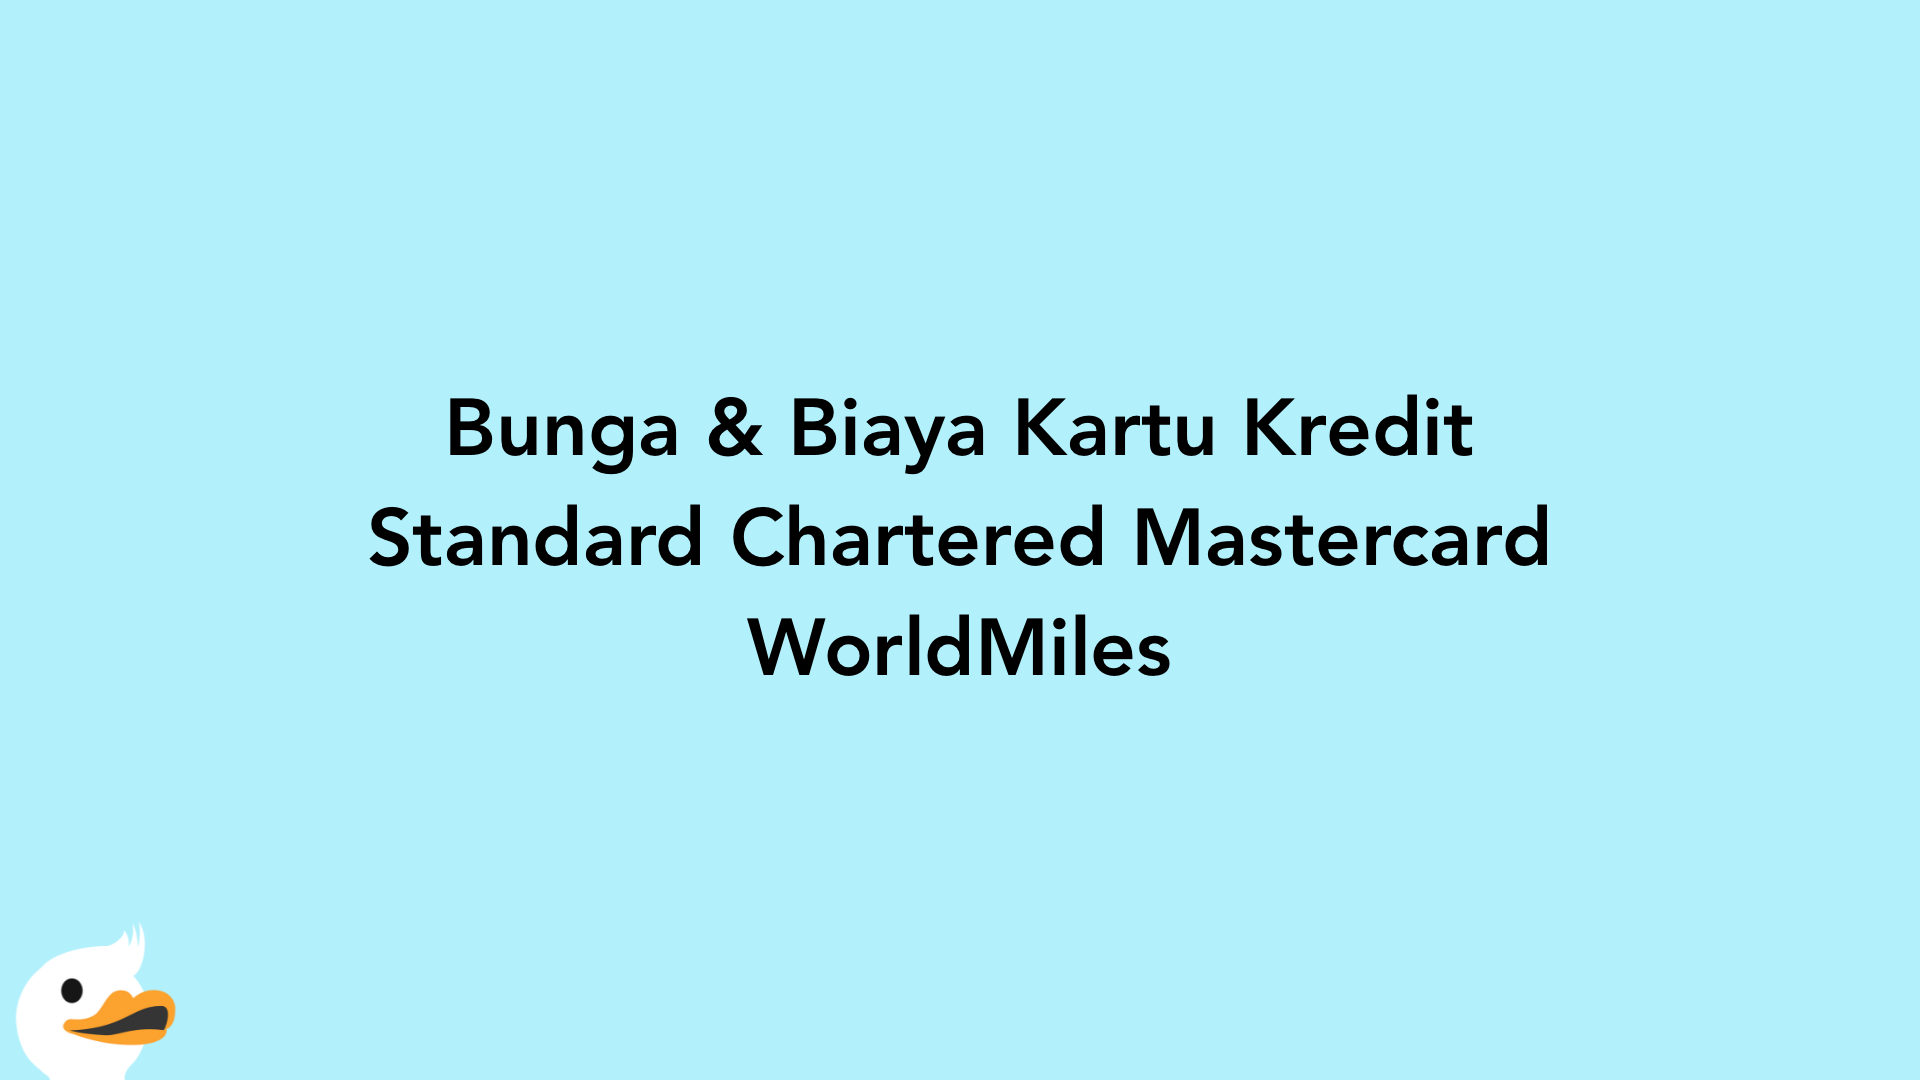 Bunga & Biaya Kartu Kredit Standard Chartered Mastercard WorldMiles